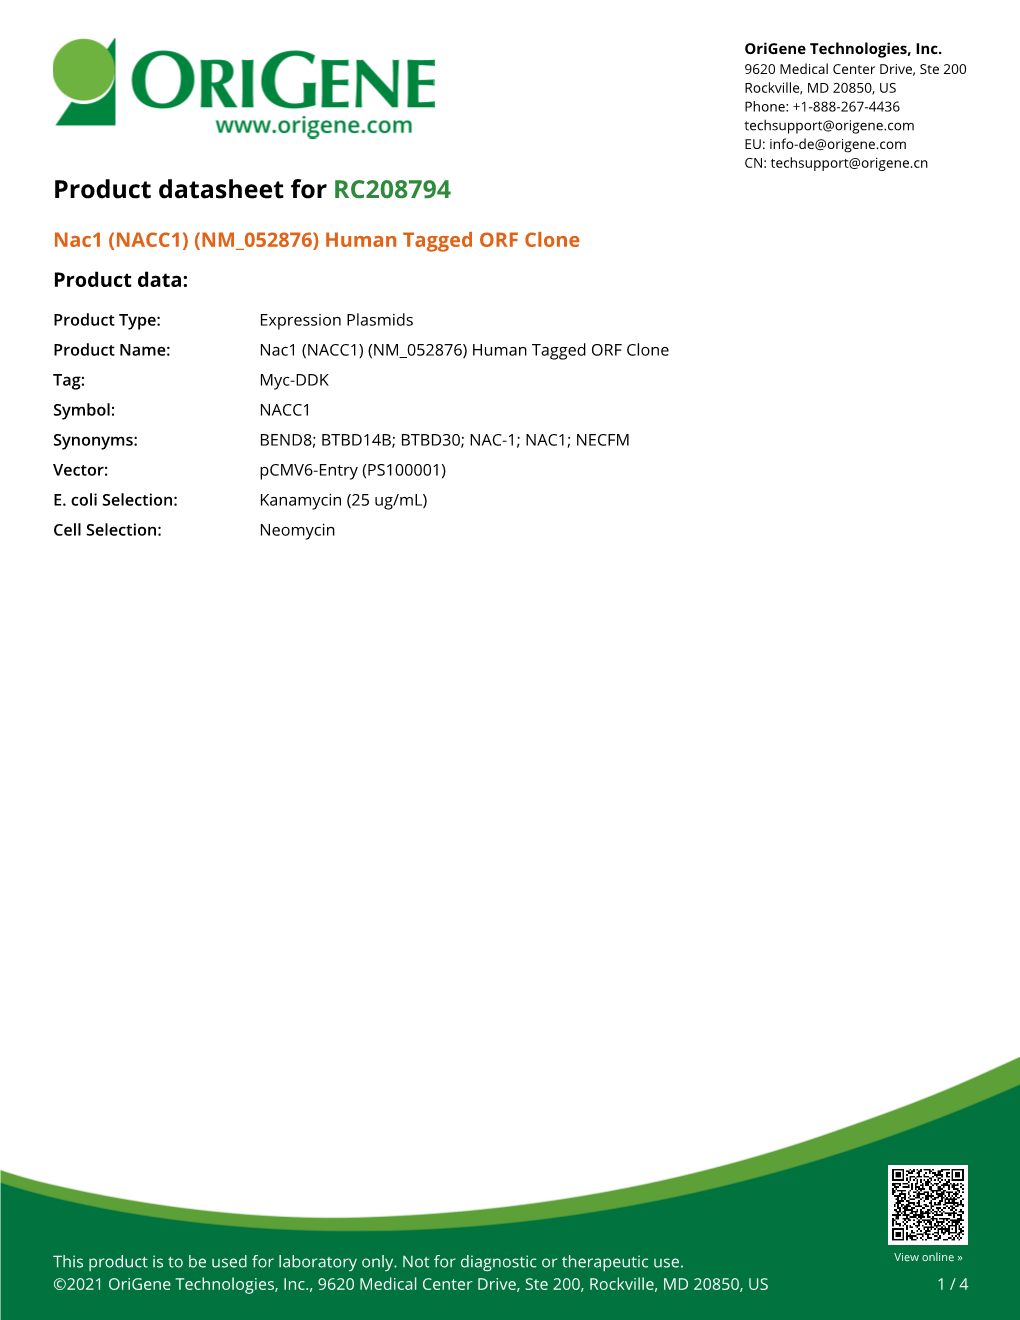 Nac1 (NACC1) (NM 052876) Human Tagged ORF Clone Product Data